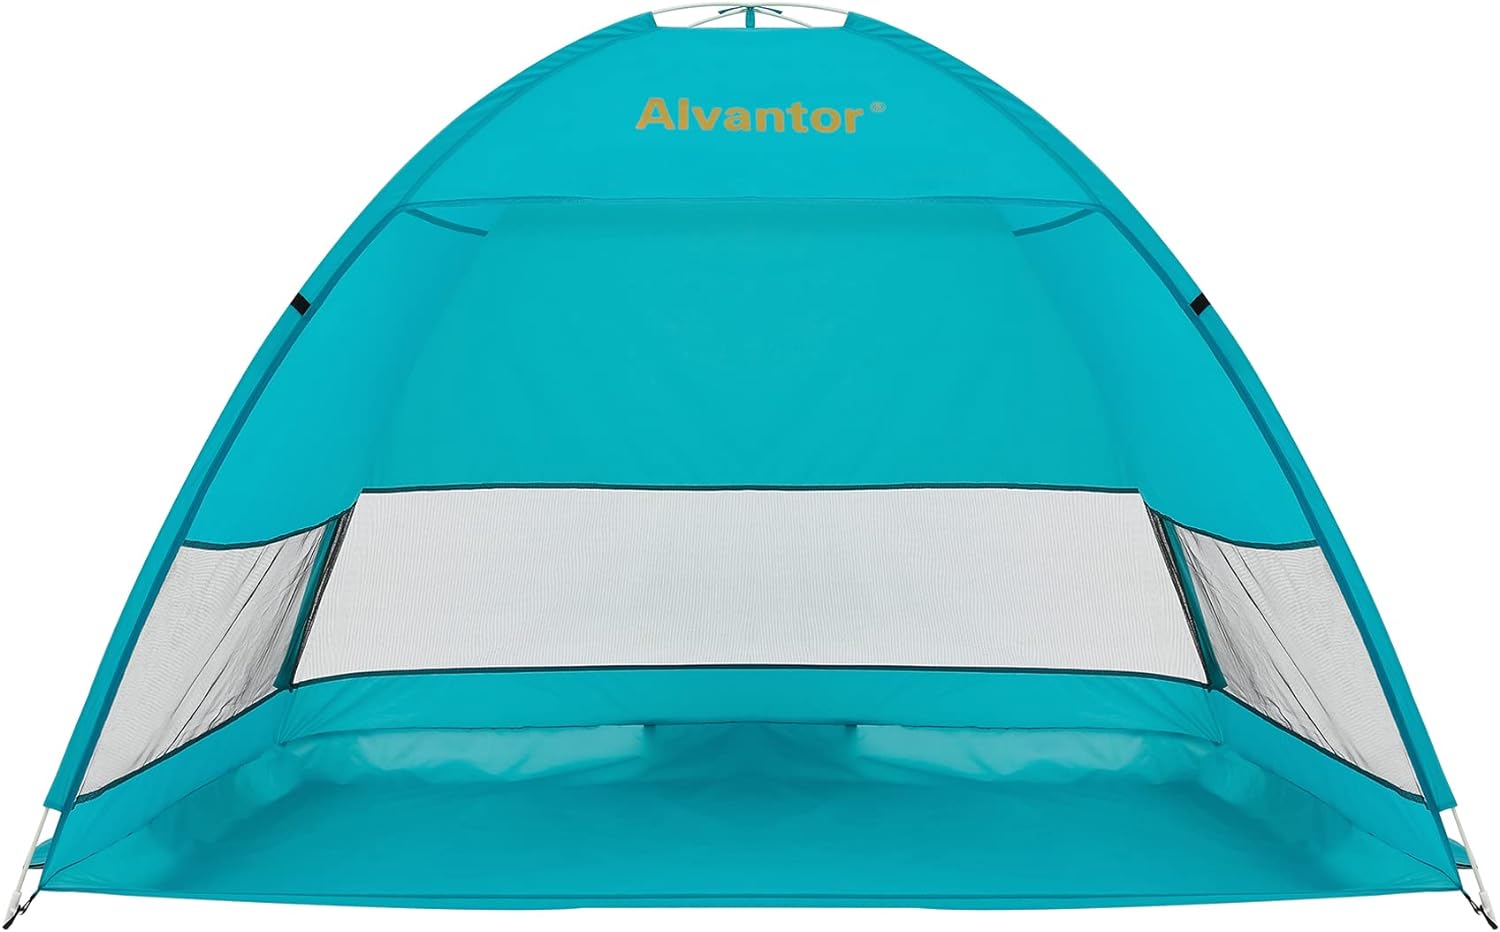 Alvantor Coolhut Instant Pop Up Beach Tent Plus